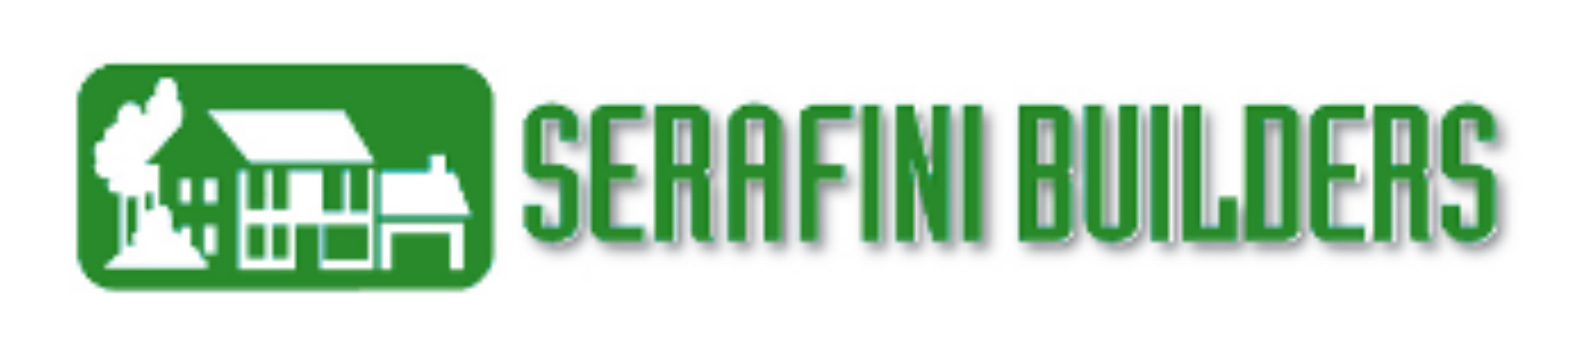 Serafini Builders & Real Estate logo